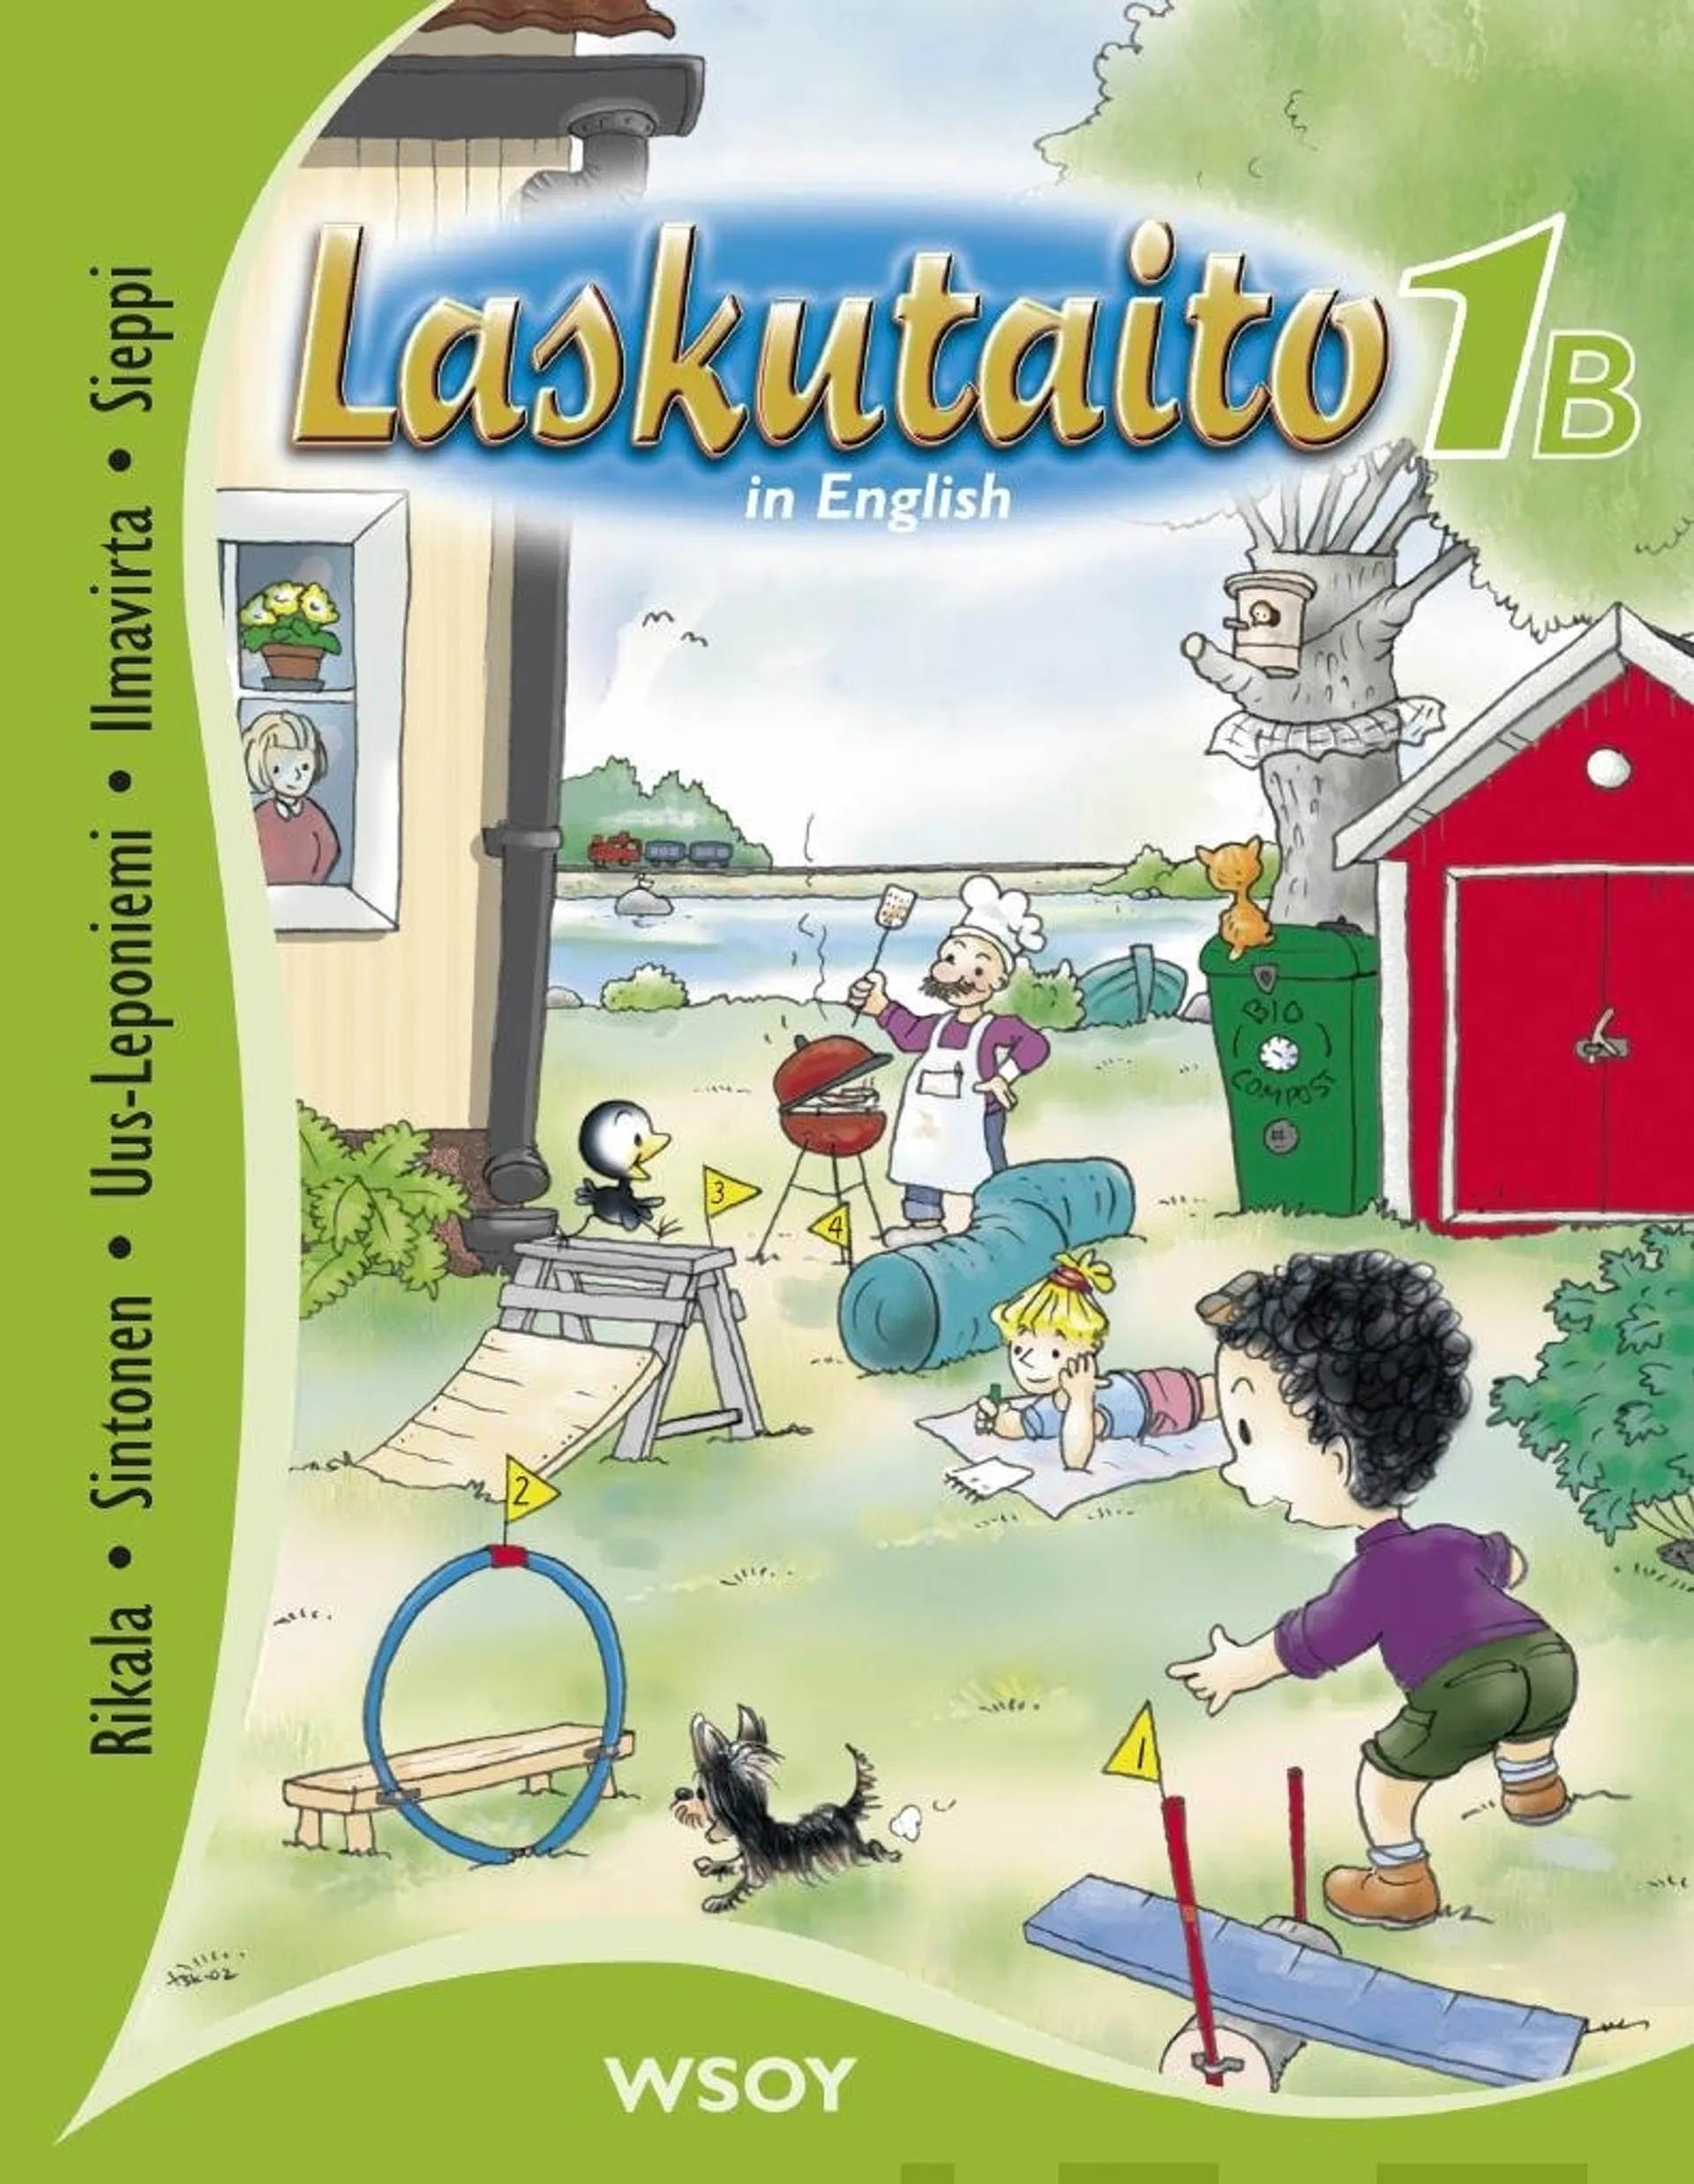 Laskutaito 1B in English